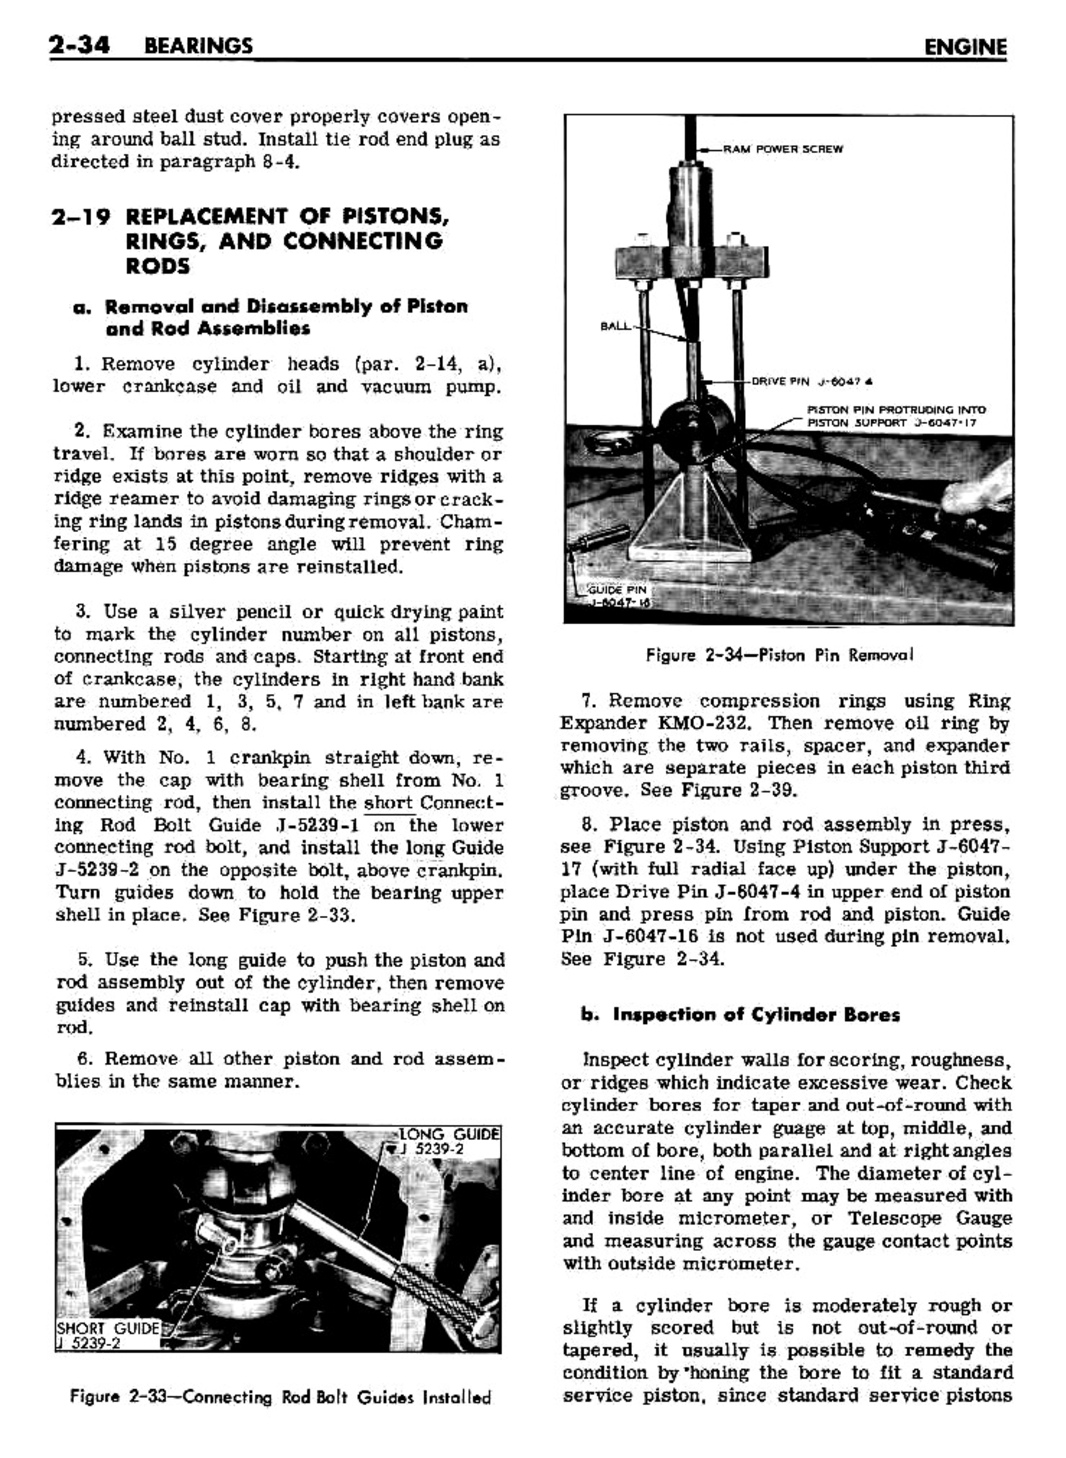 n_03 1961 Buick Shop Manual - Engine-034-034.jpg